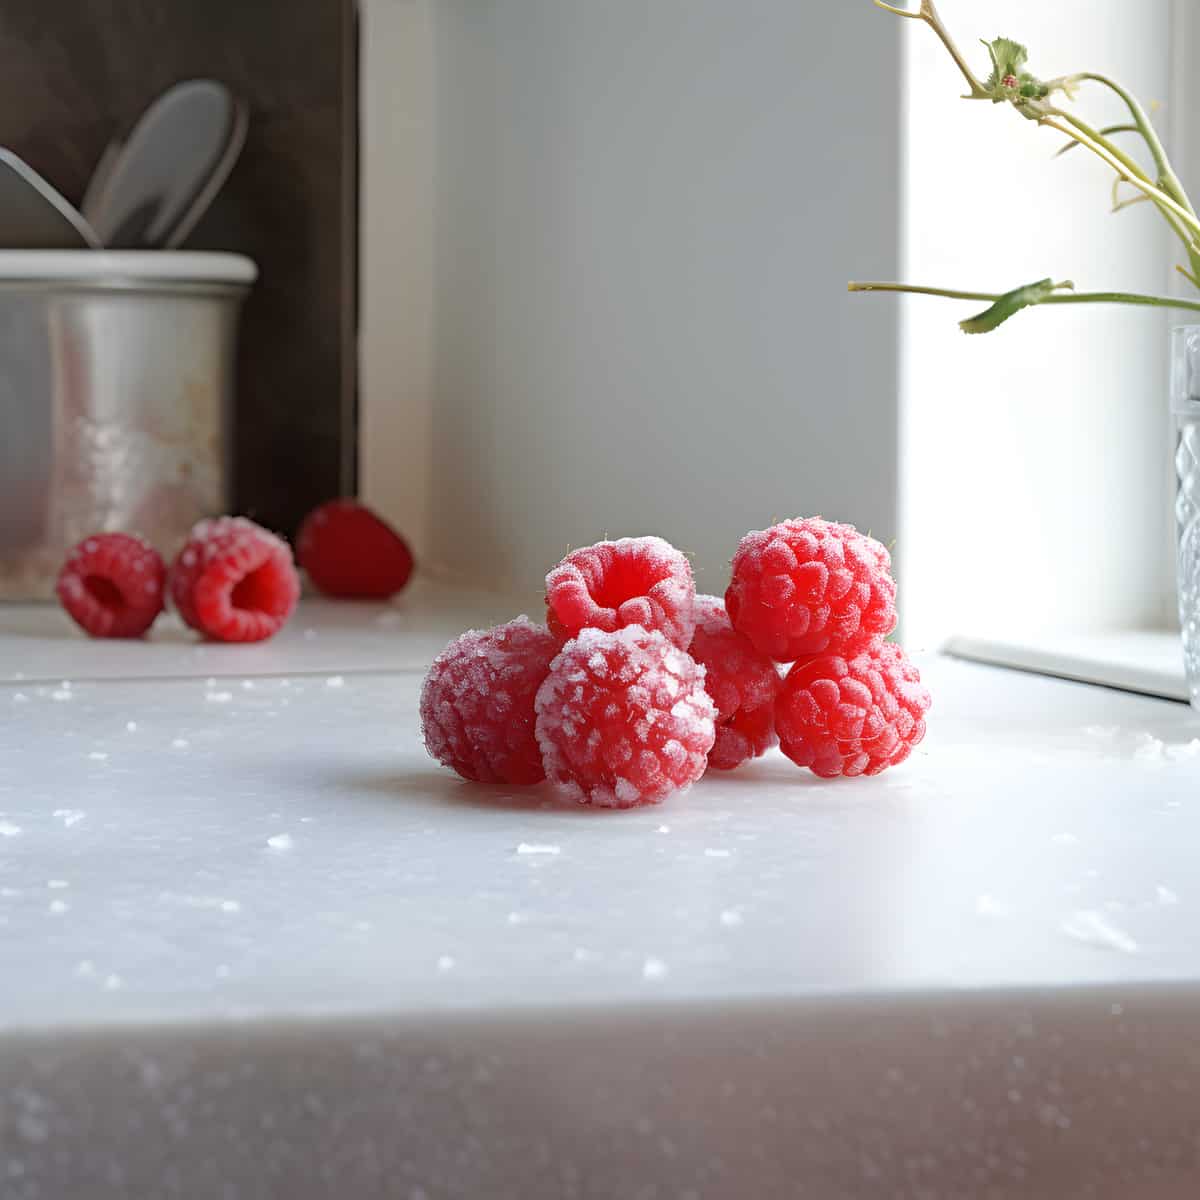 Snow Raspberry on a kitchen counter